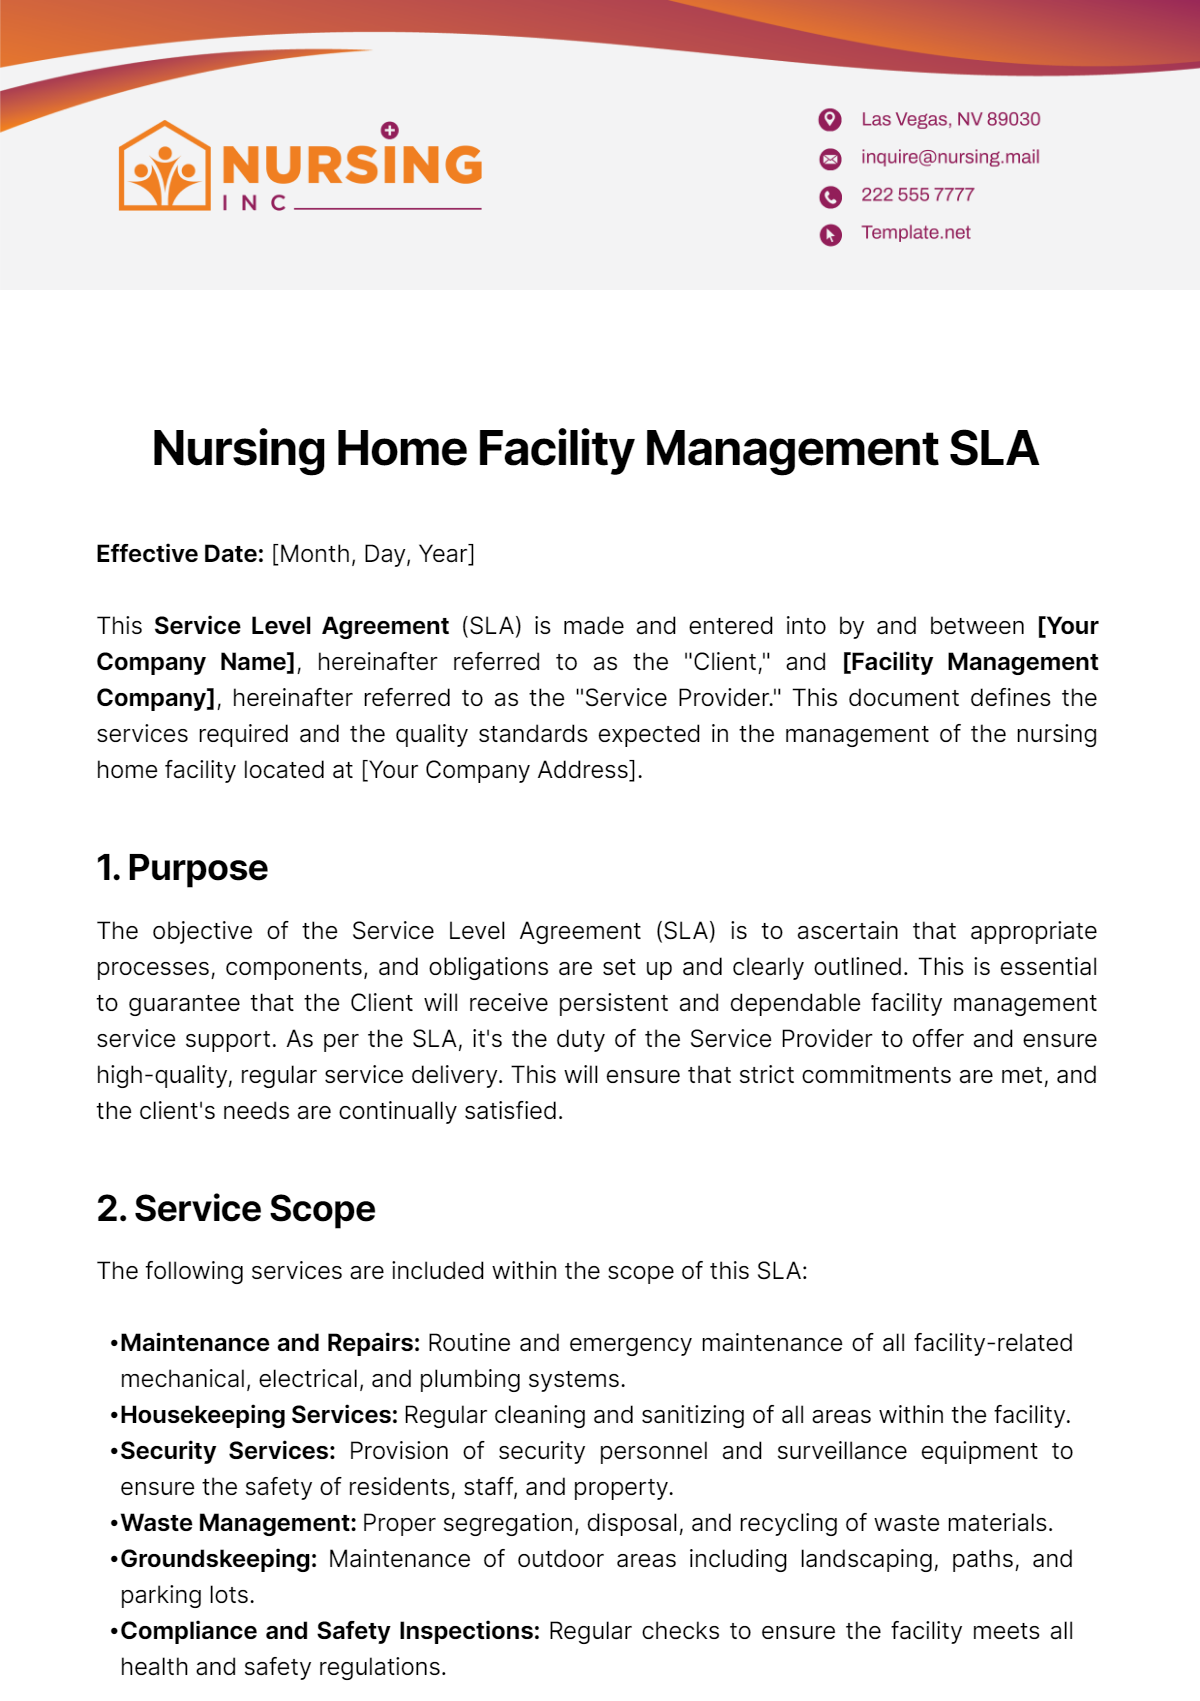 Nursing Home Facility Management SLA Template